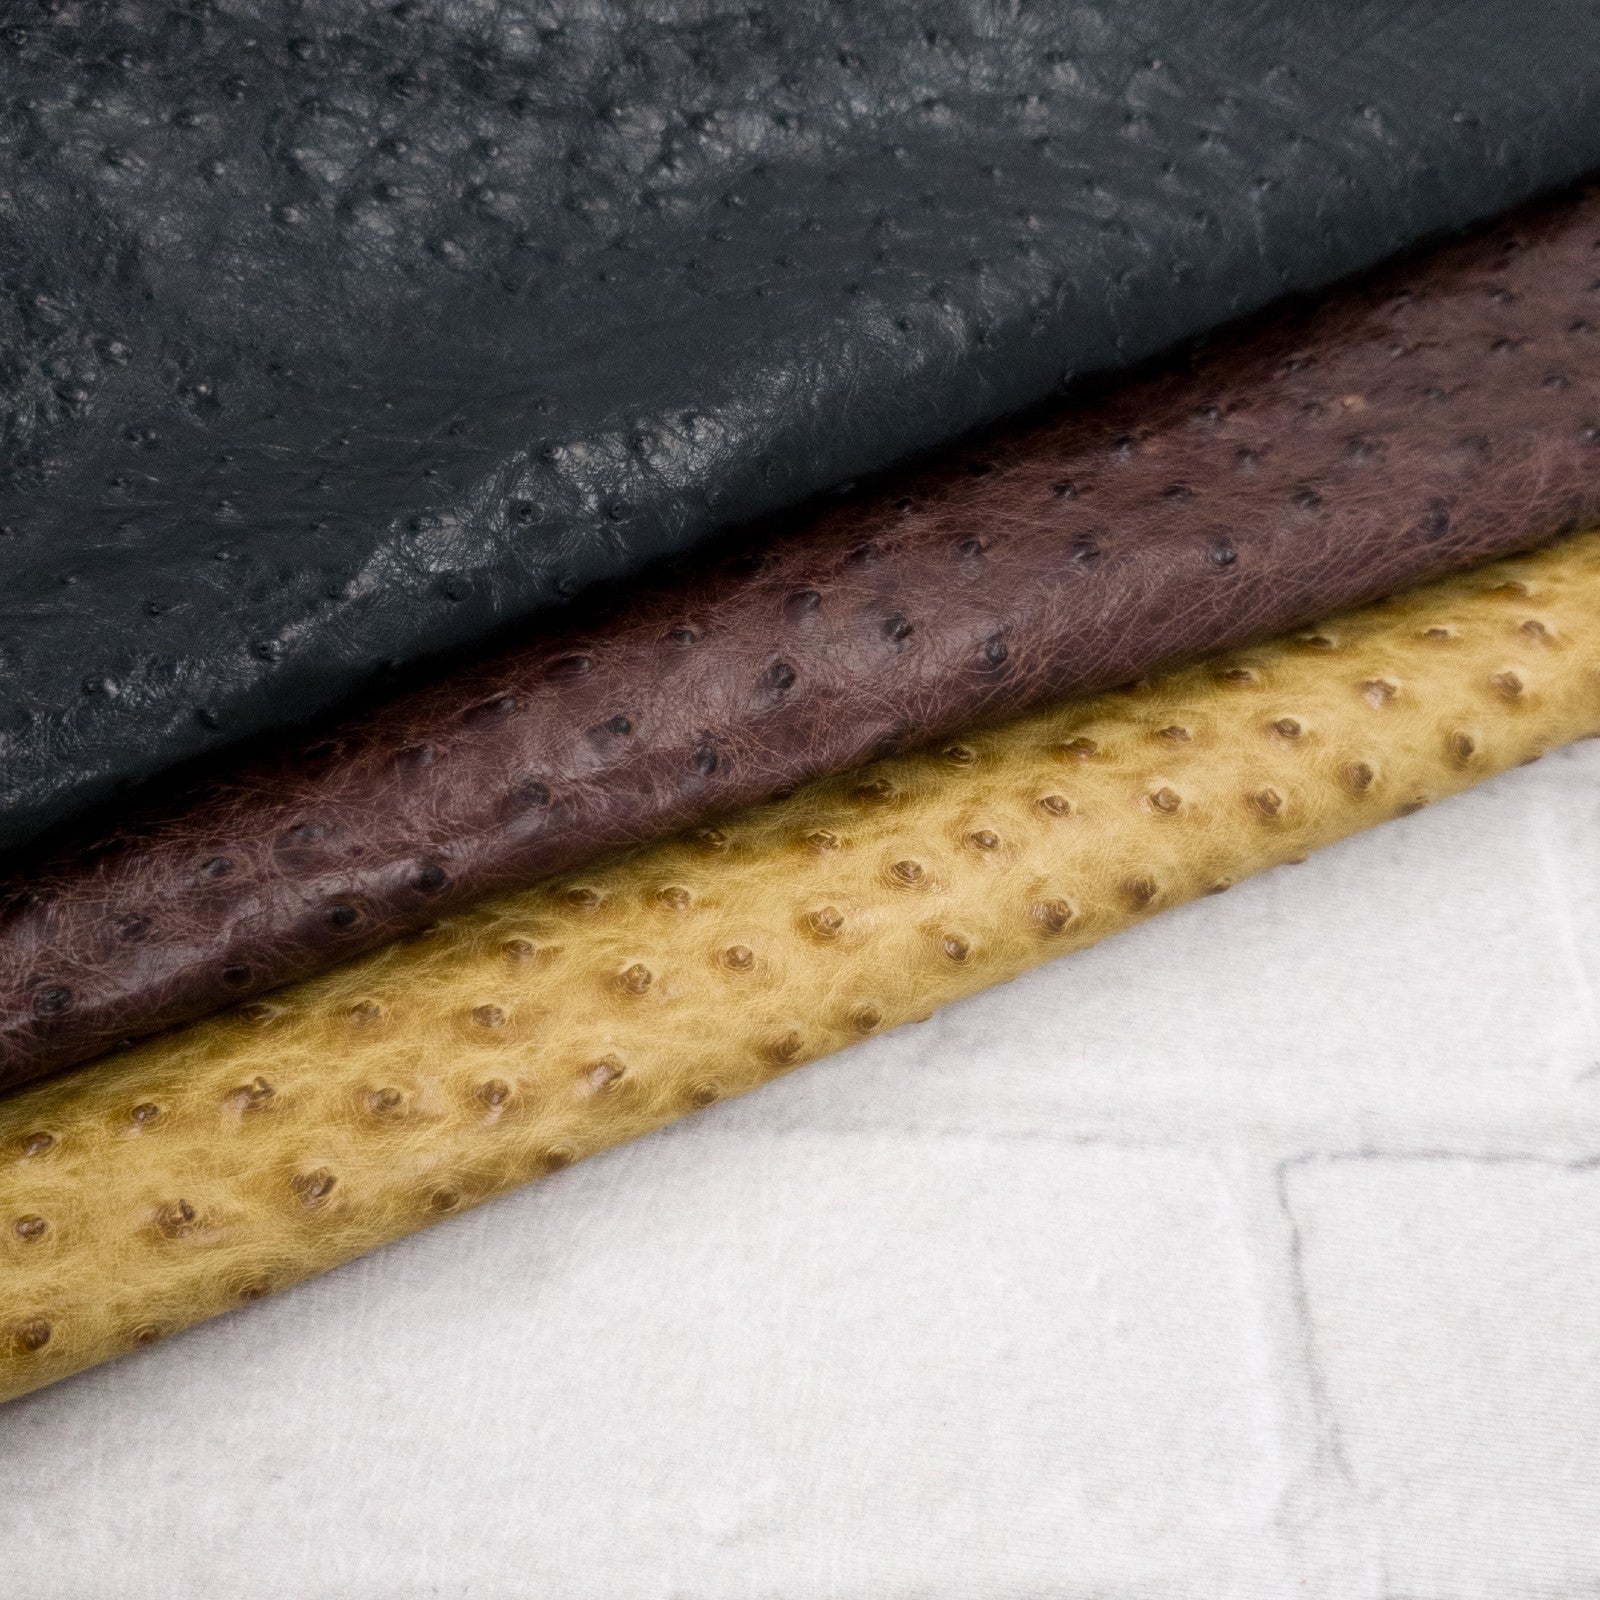 Ostrich Skin Leather - ANTHRACITE SF - 18.7292 sq ft - Grade 3 - OSTRICH  MARKET